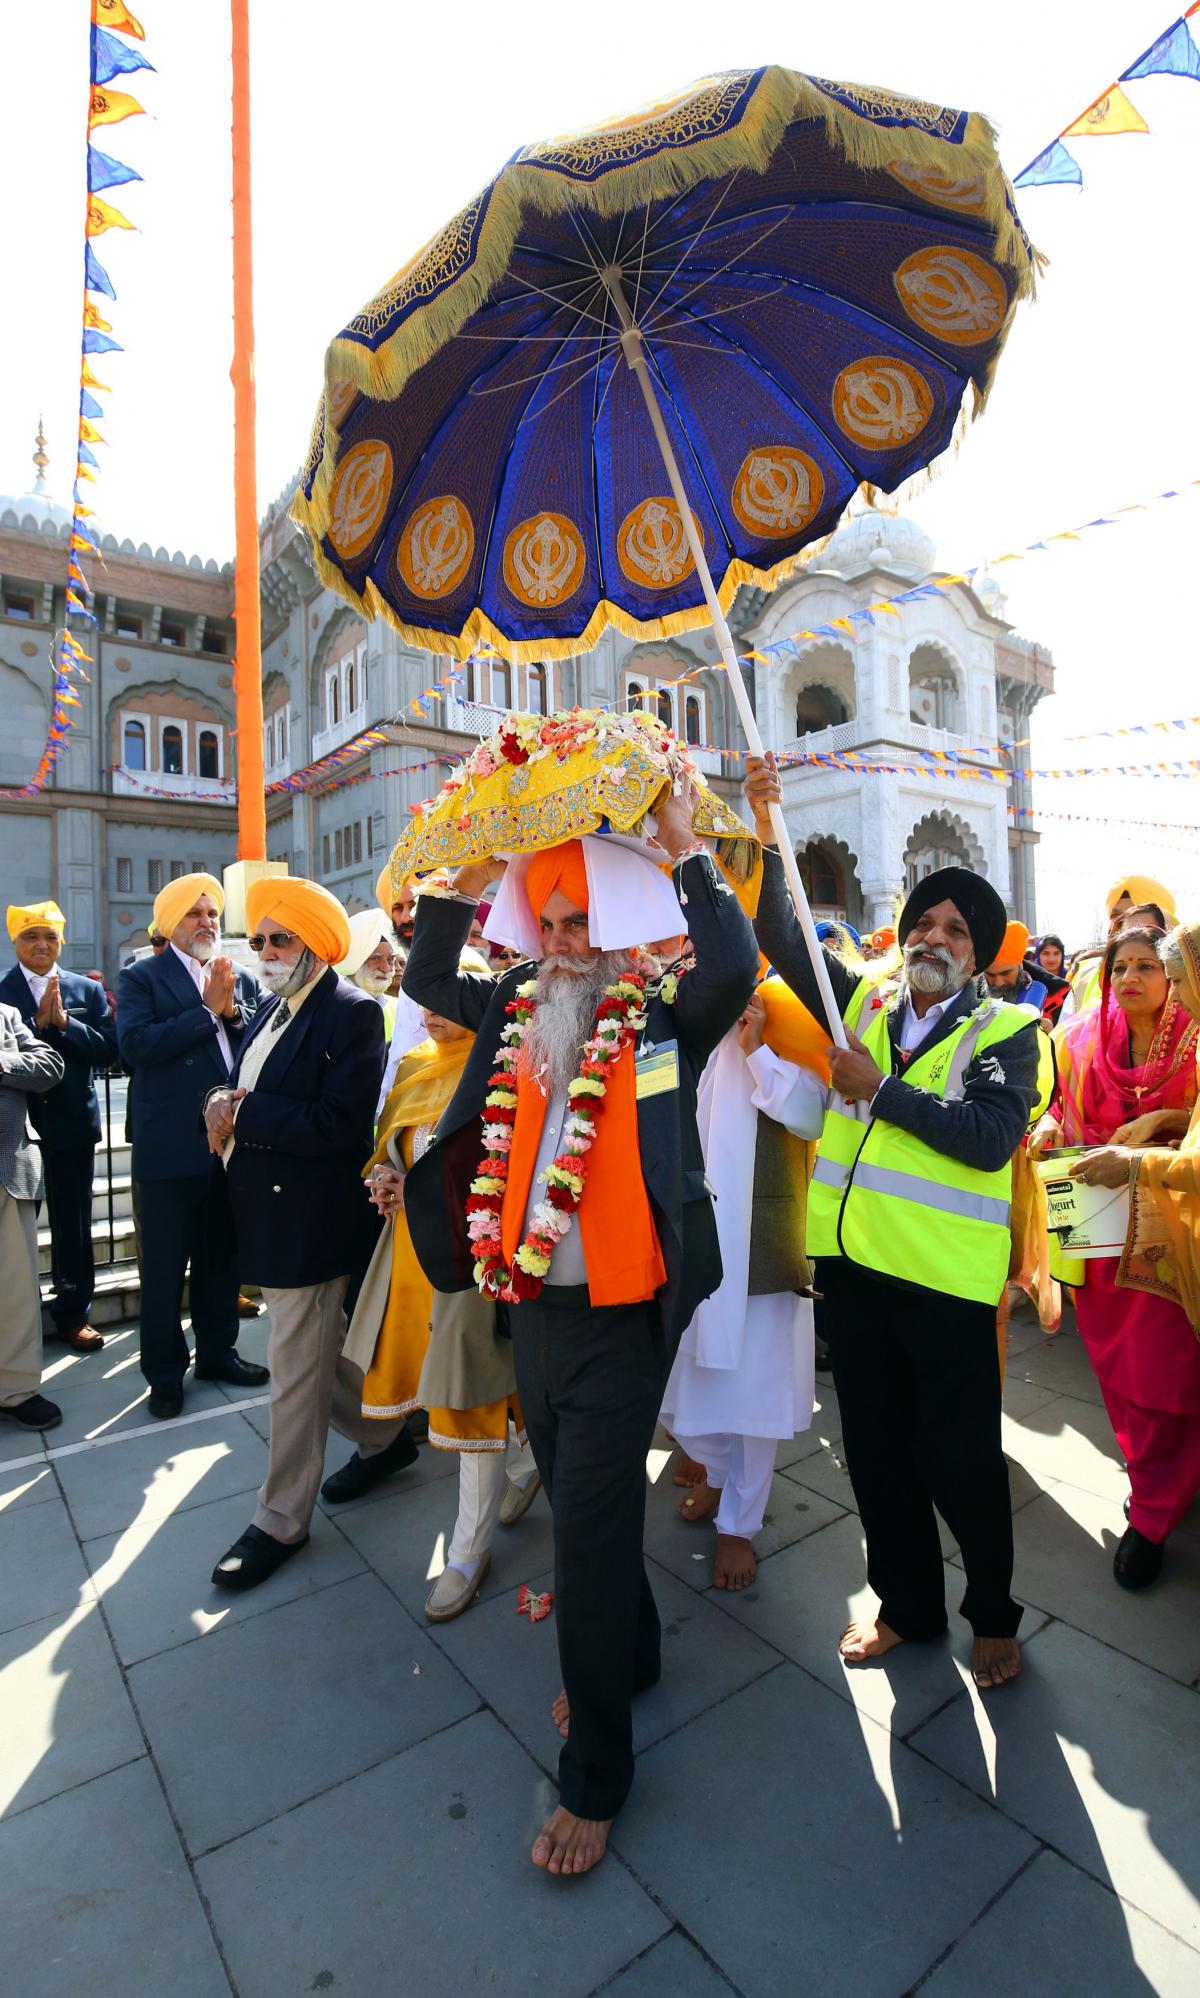 Members of the Sikh community follow the Guru Granth Sahib, the Sikh holy book, during the Nagar Kirtan procession through Gravesend, Kent. (Gareth Fuller/PA)